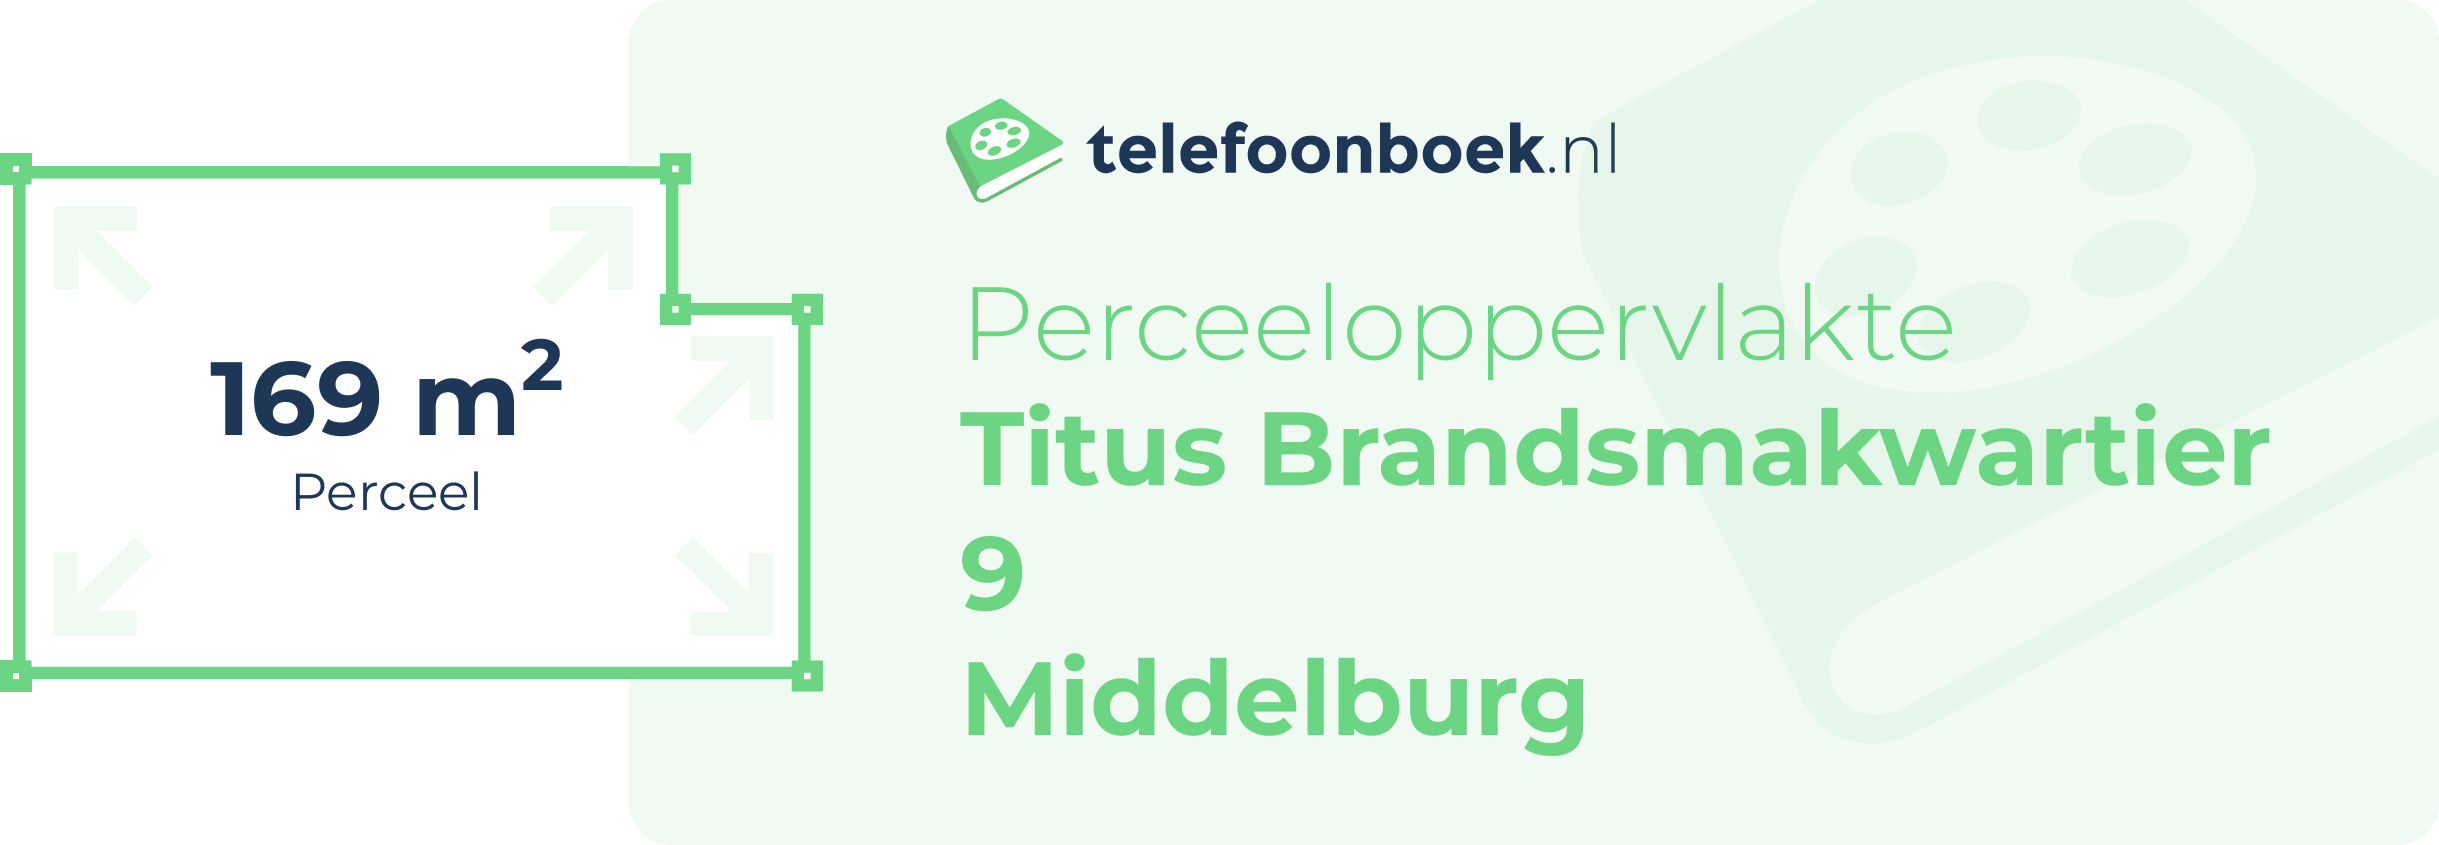 Perceeloppervlakte Titus Brandsmakwartier 9 Middelburg